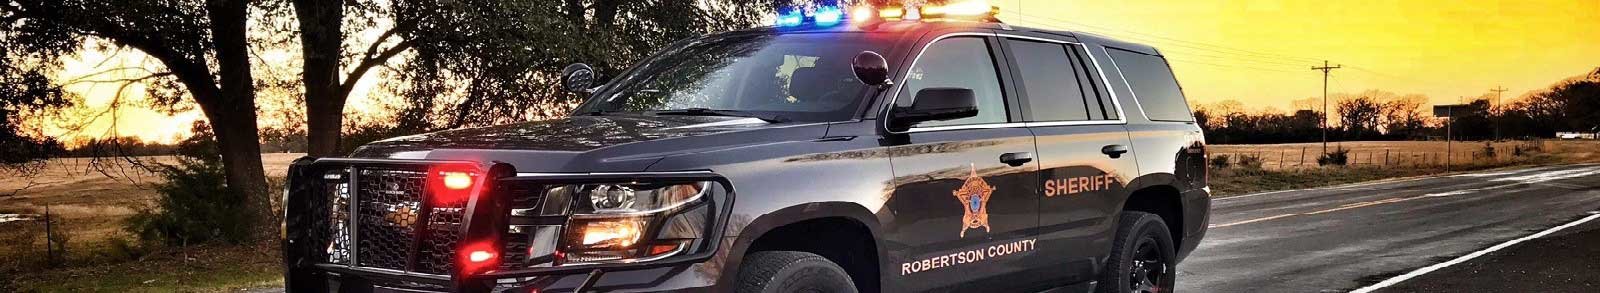 Robertson County TX Sheriff Homepage Slideshow